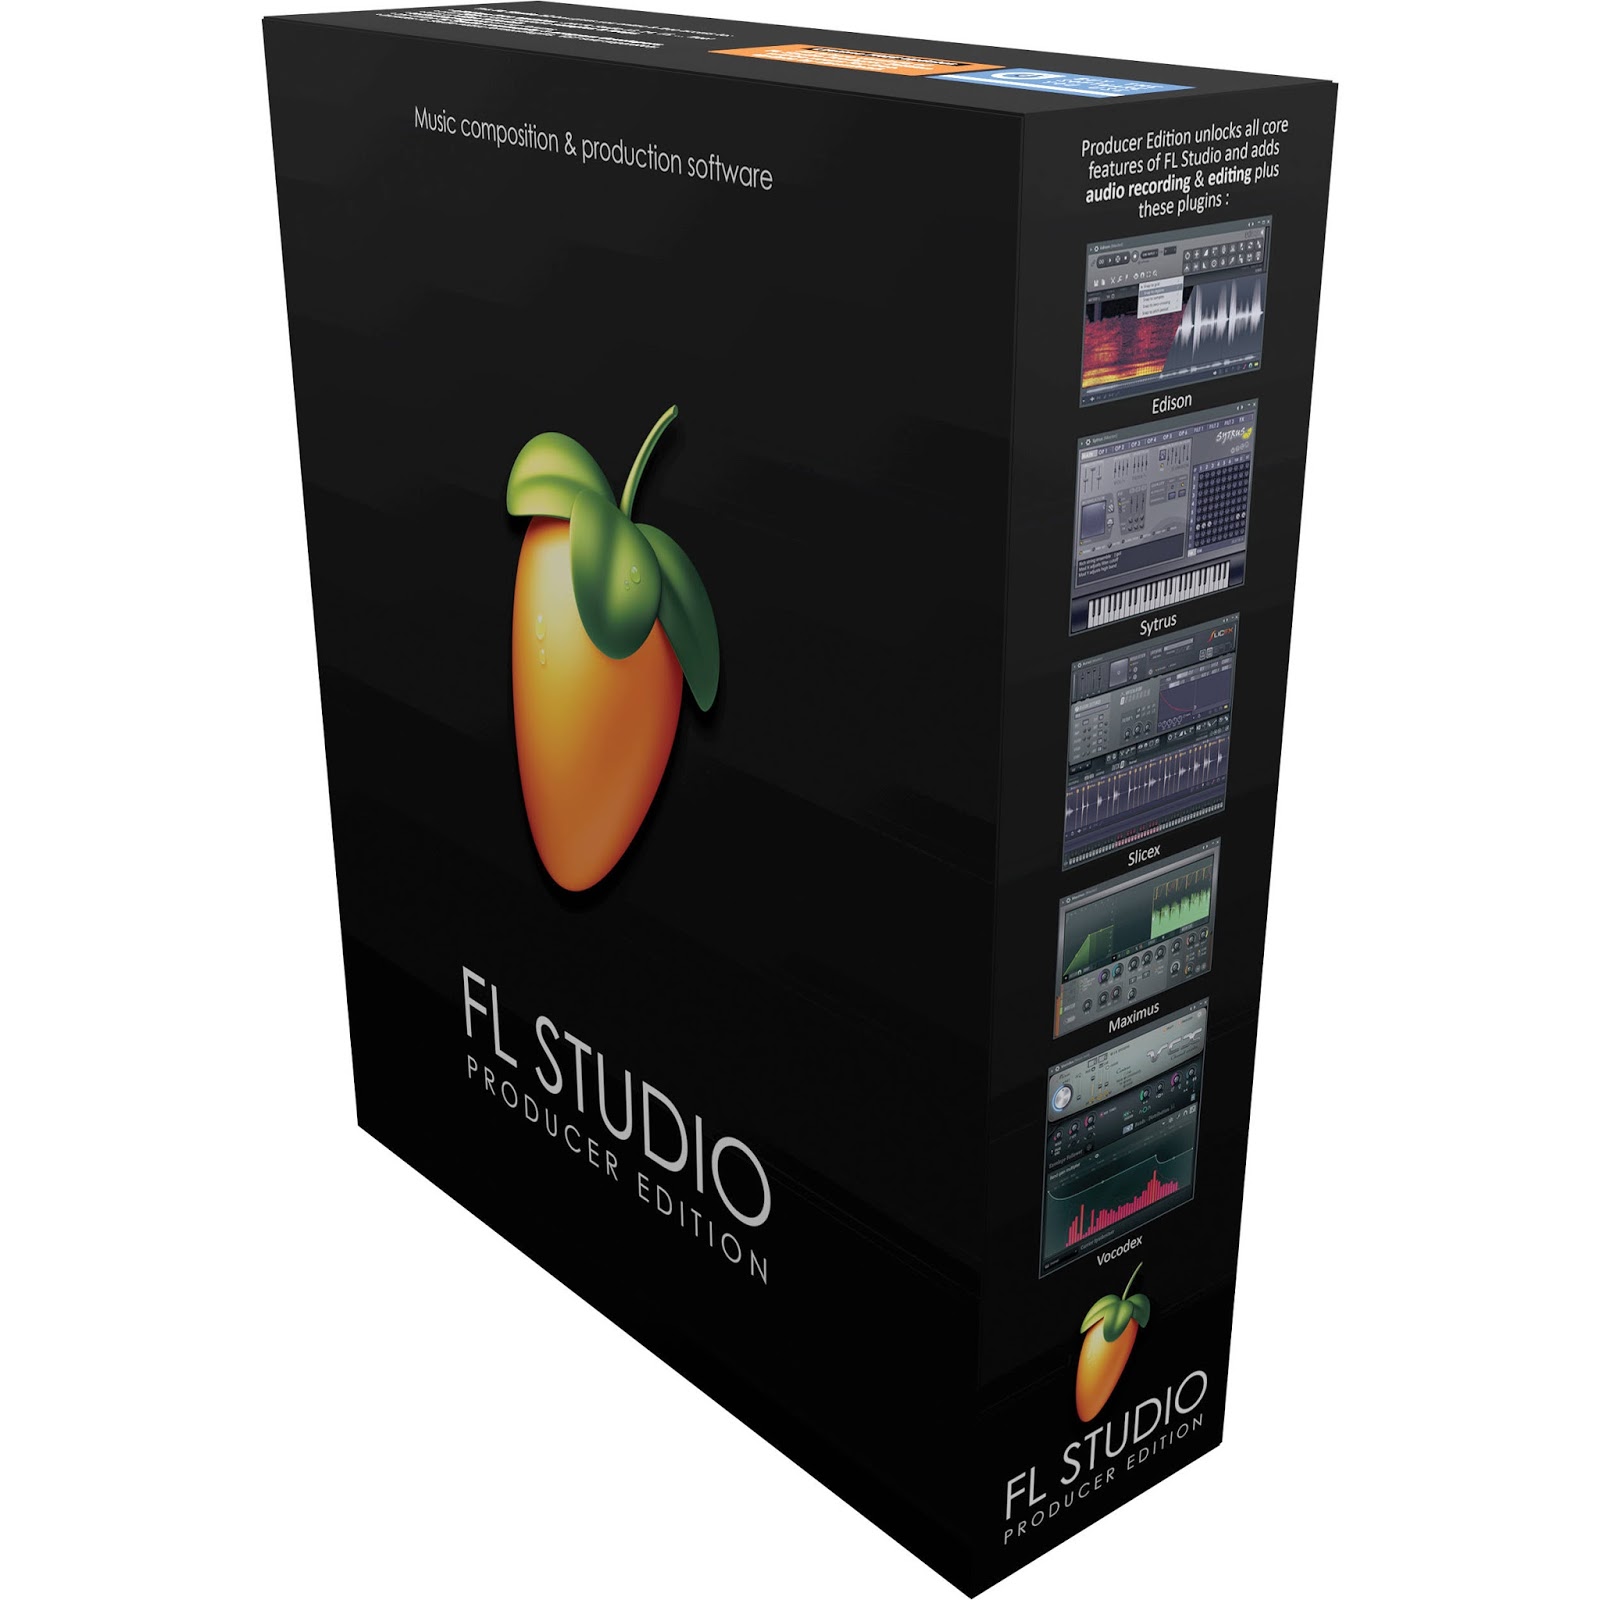 Fl studio 12 ezkeys free download mac